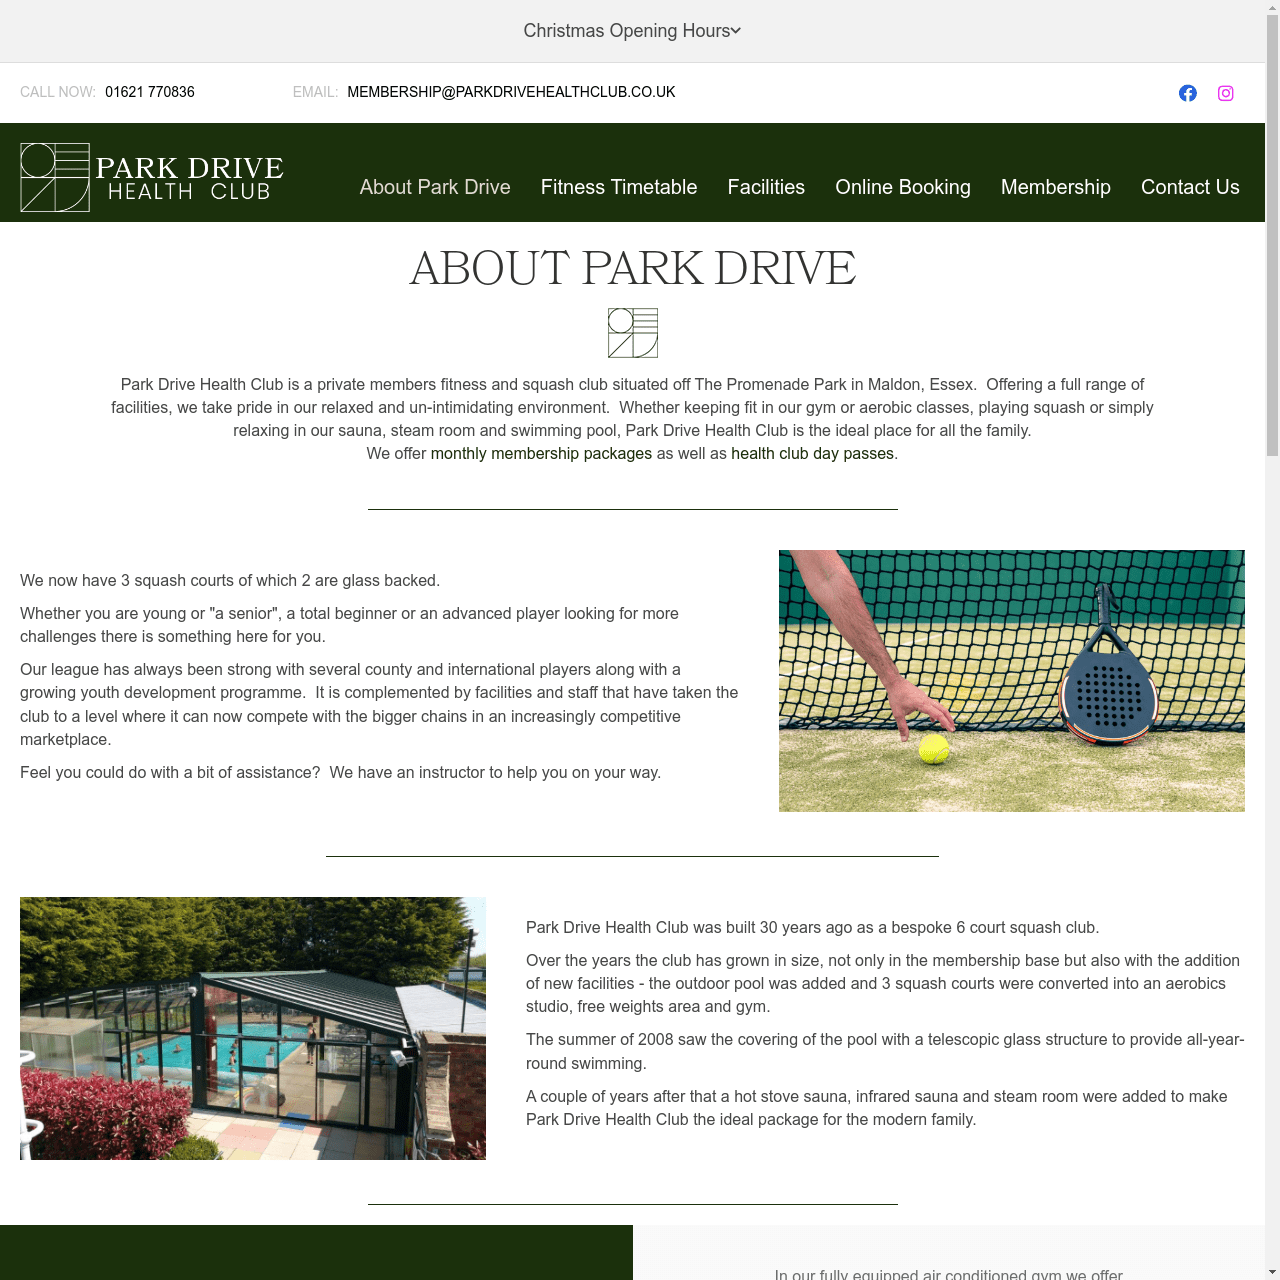 Park Drive Health Club Website built by Solve My Problem - About Park Drive Page